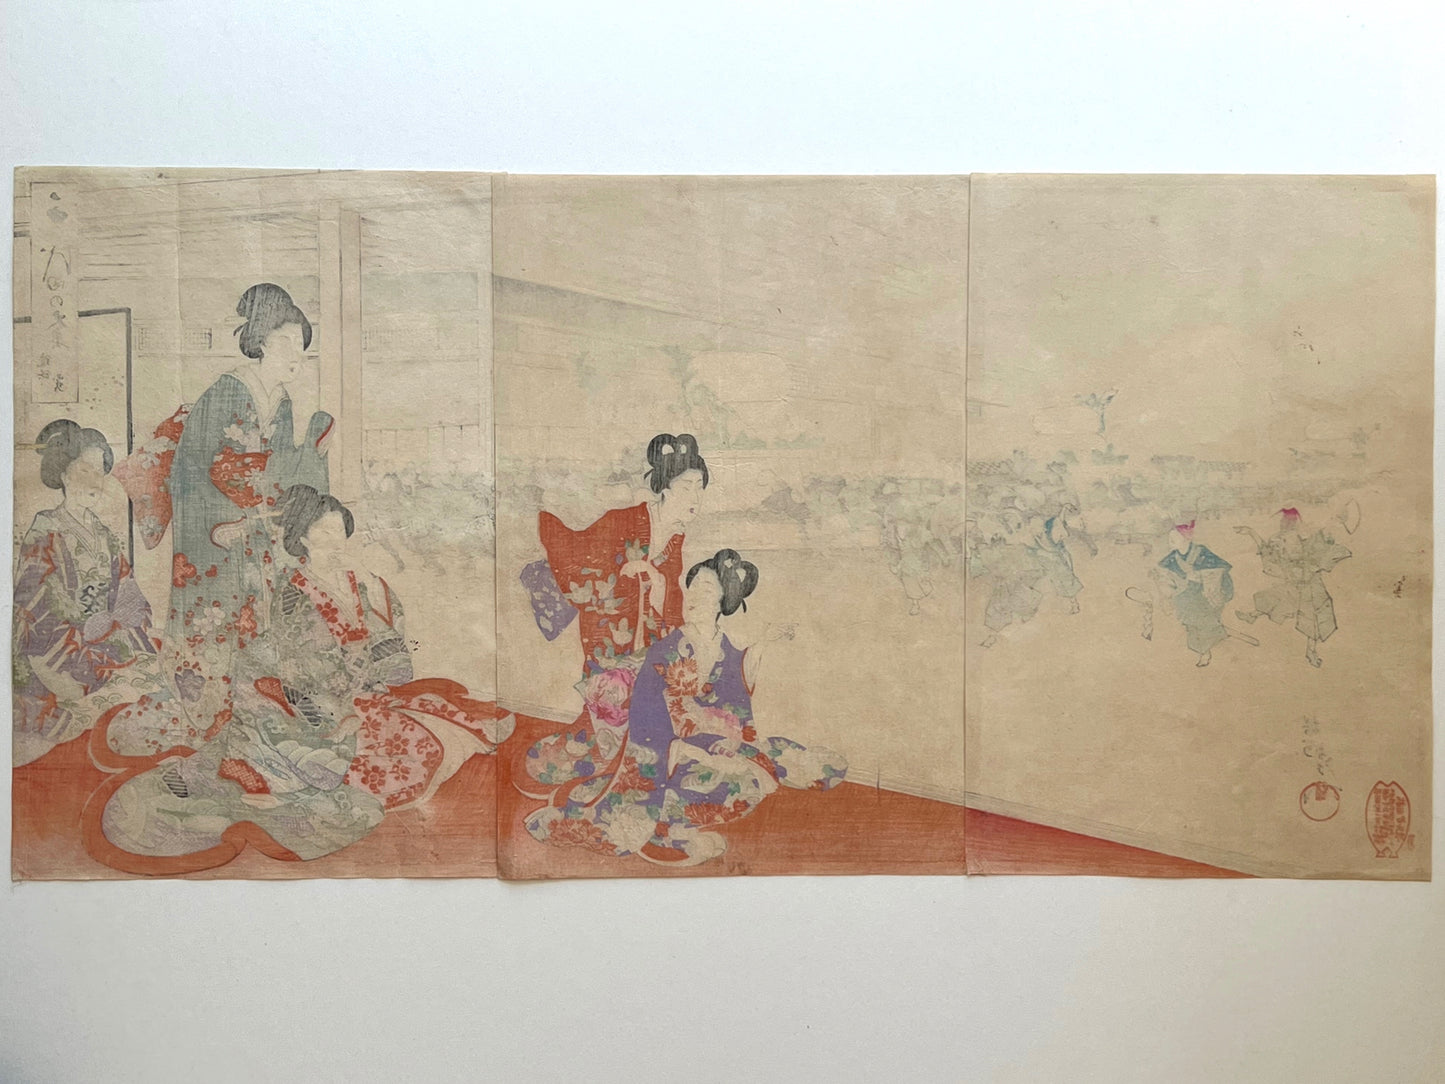 Estampe japonaise triptyque de Chikanobu, kimono tissu motifs multicolore, fleurs prunier, dos estampe